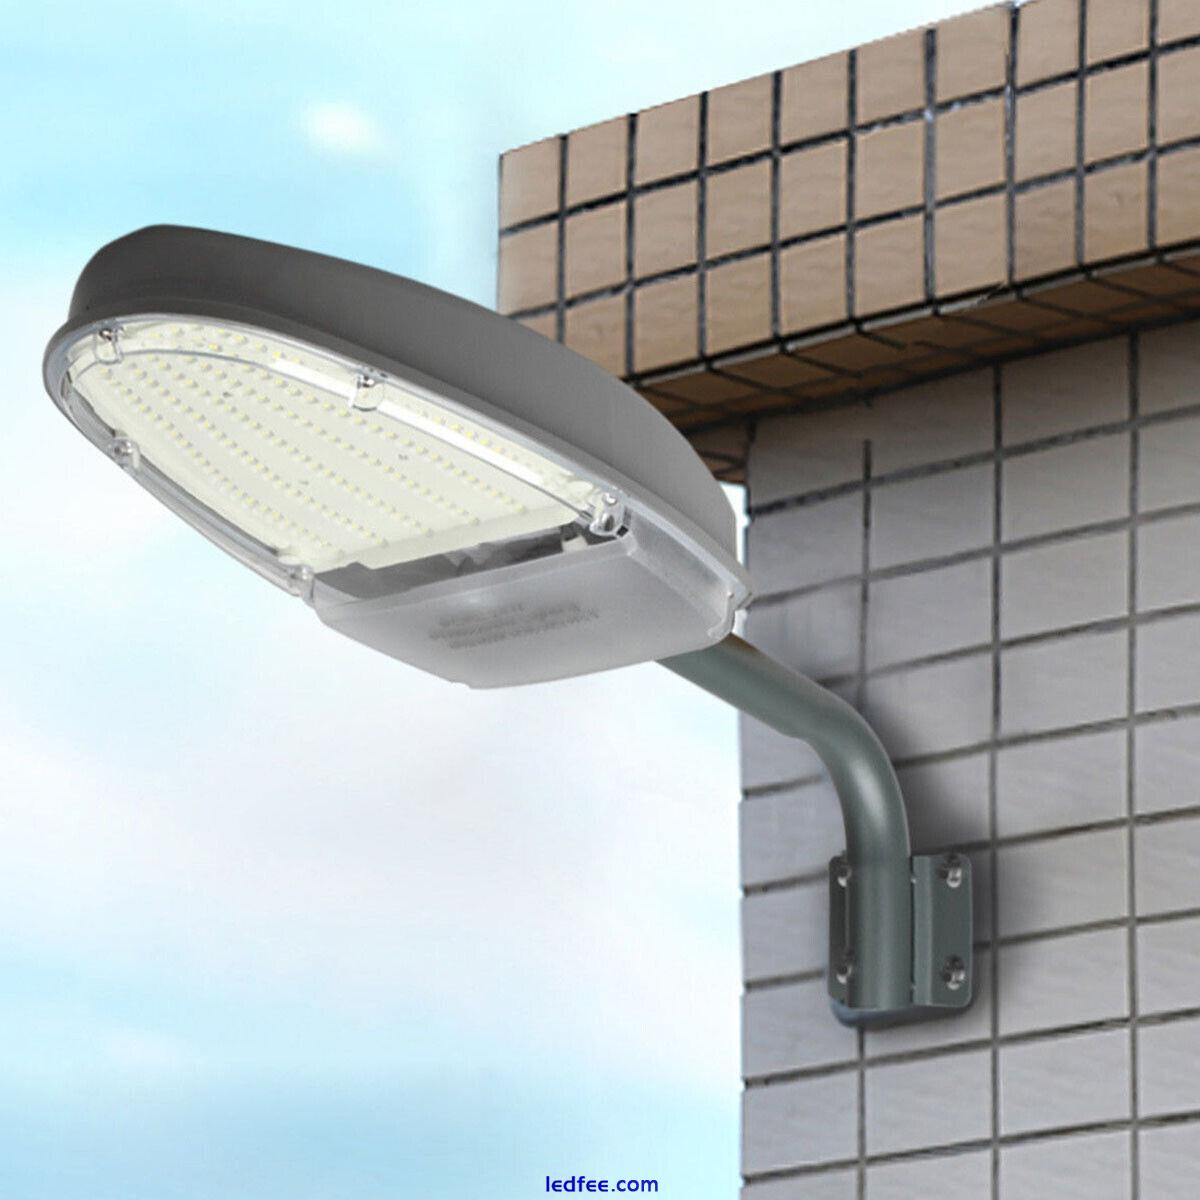 4PCS Waterproof IP65 144LED Parking Street Area Light 2500LM Dusk to Dawn Sensor 2 